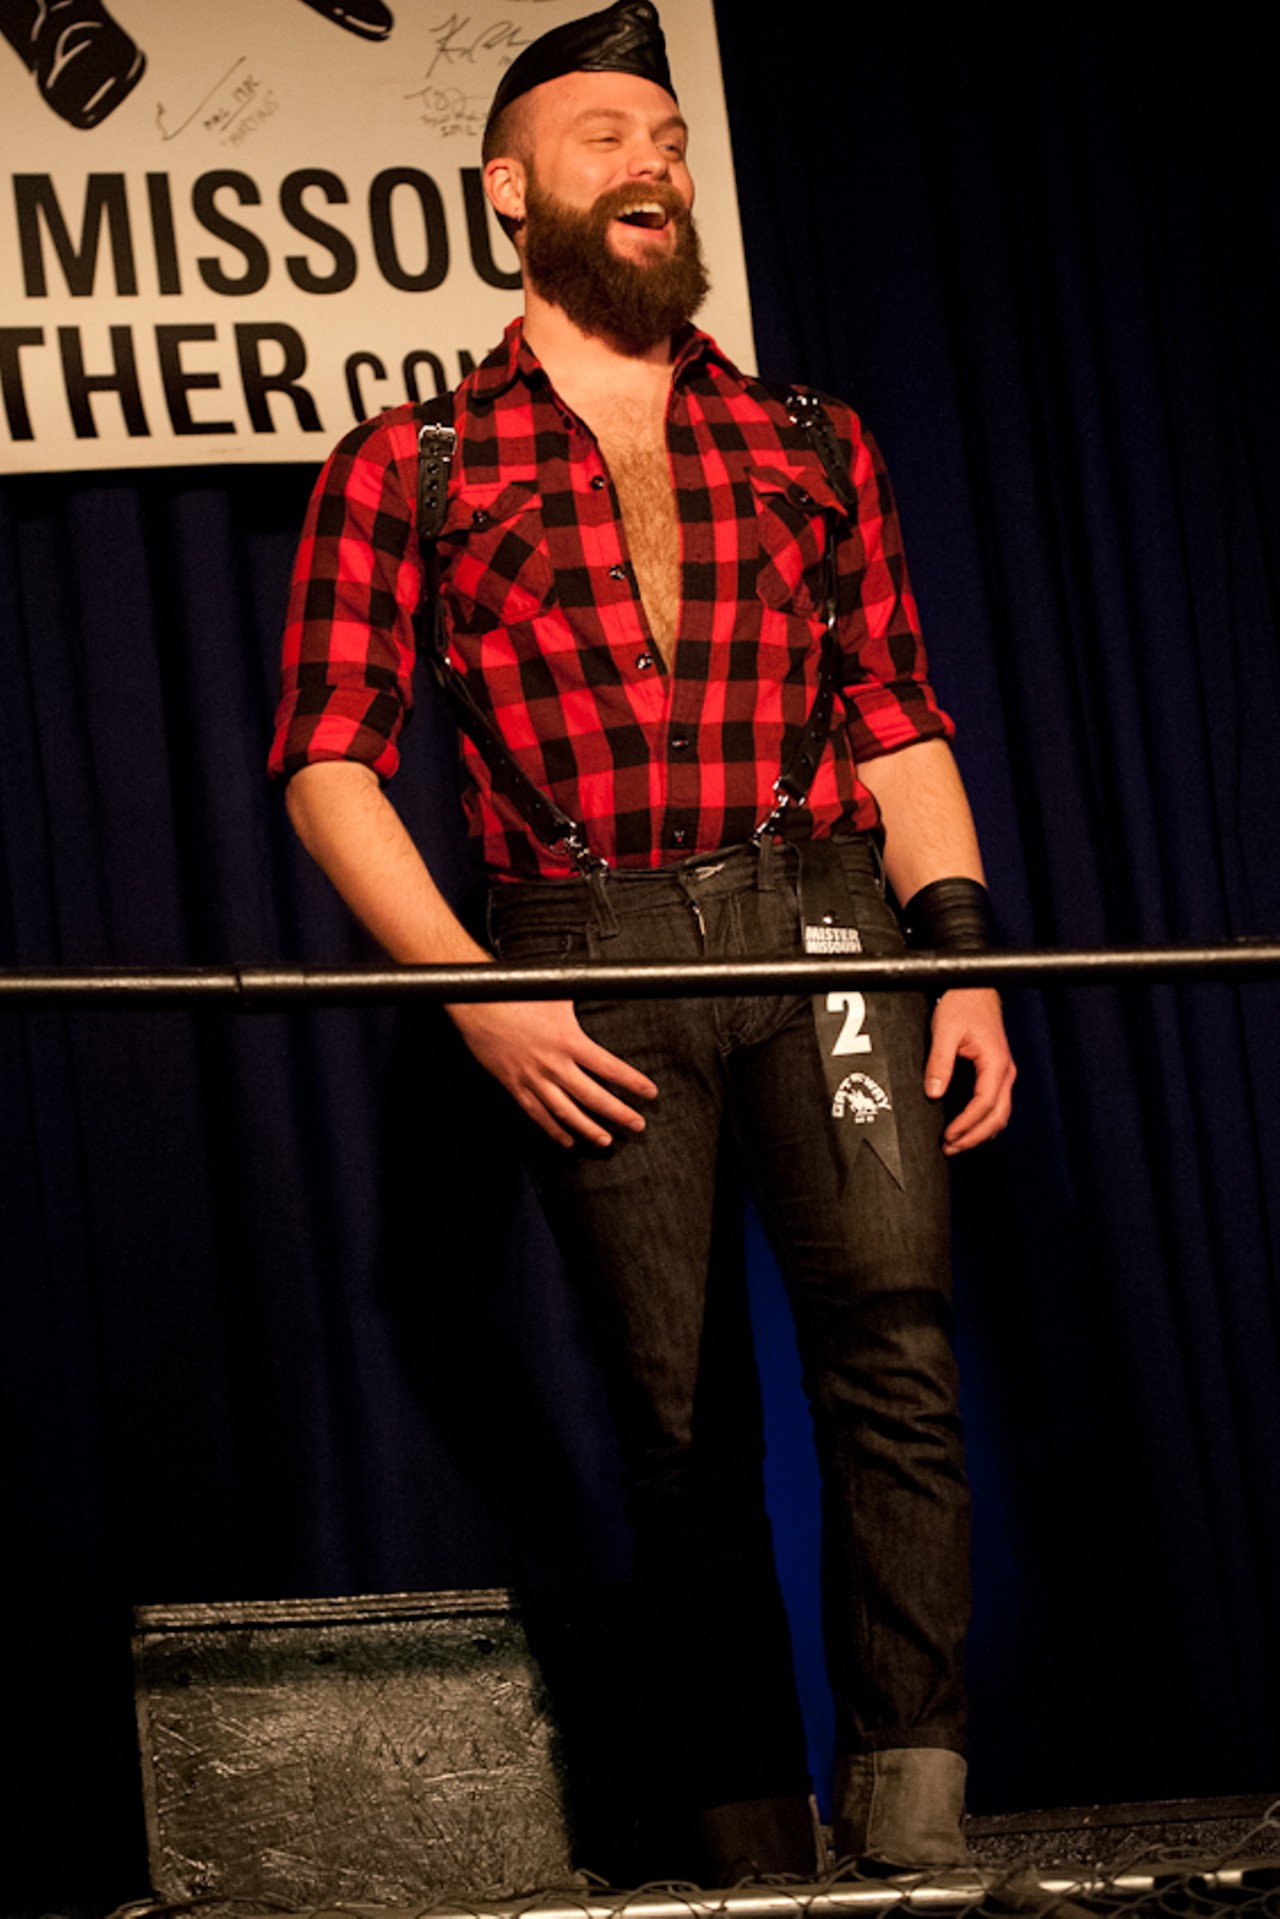 Mr. Missouri Leather 2013